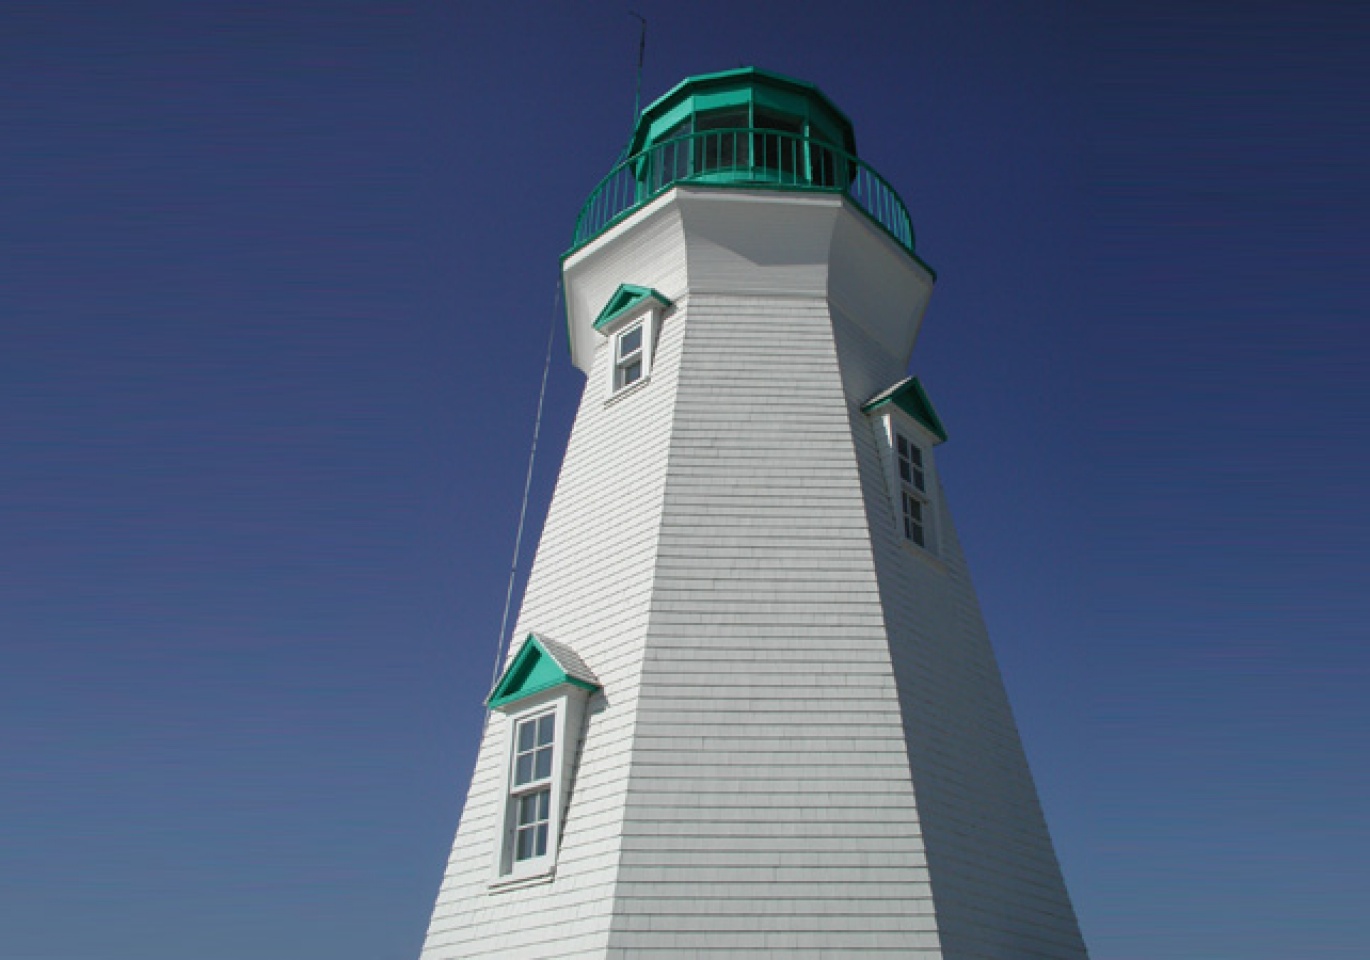 Port Dalhousie Light House Image 1